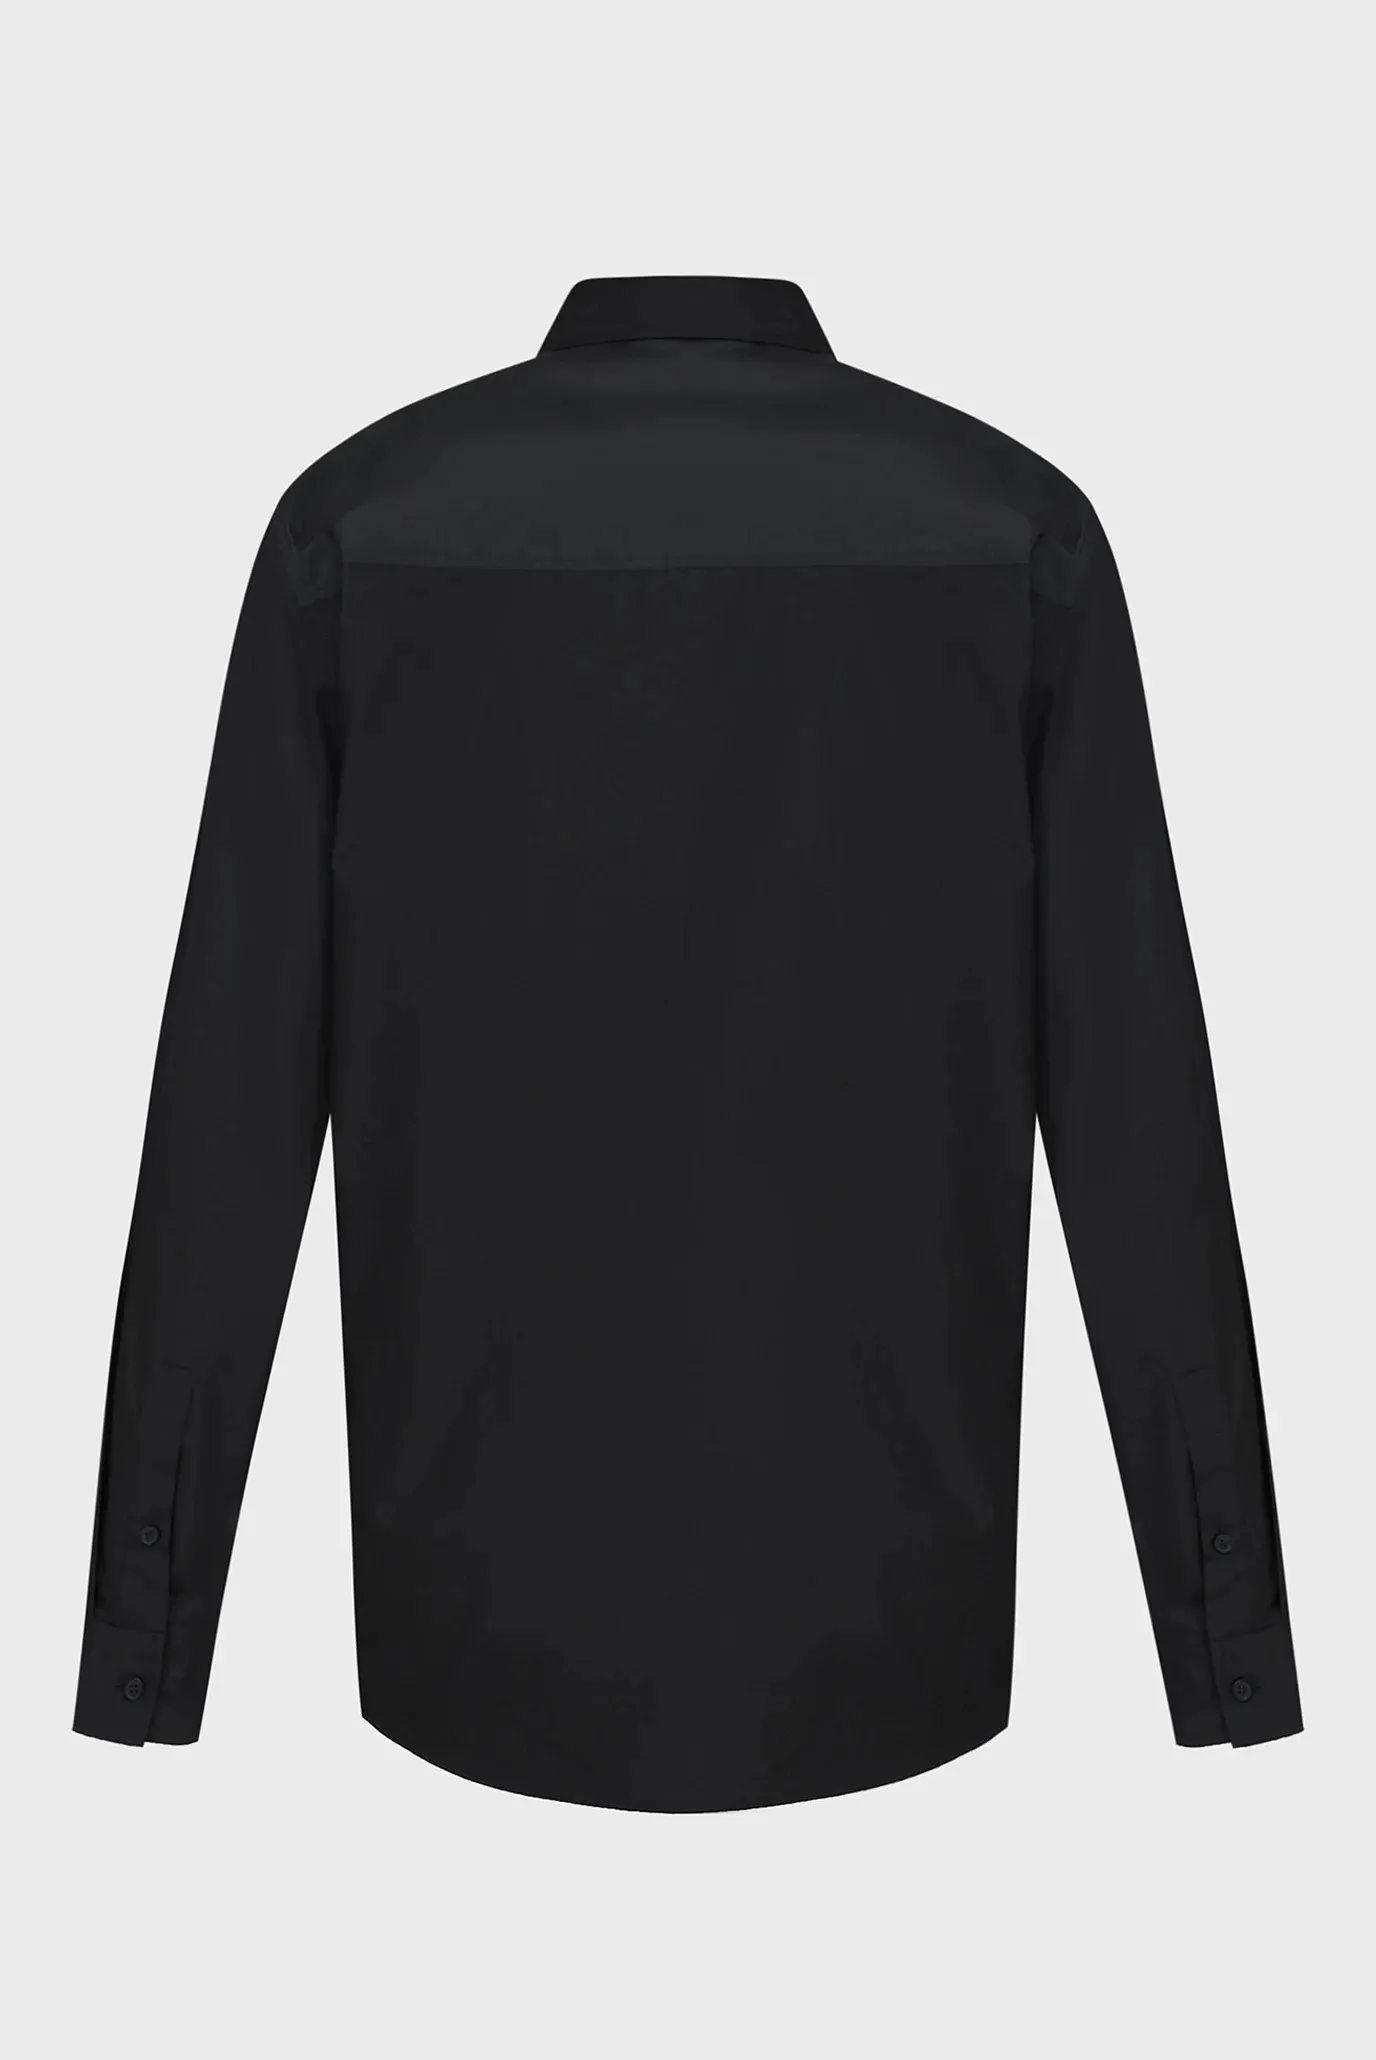 KARL LAGERFELD JEANS KLJ Mix Material Woven Shirt - Black | Choice+Attitude